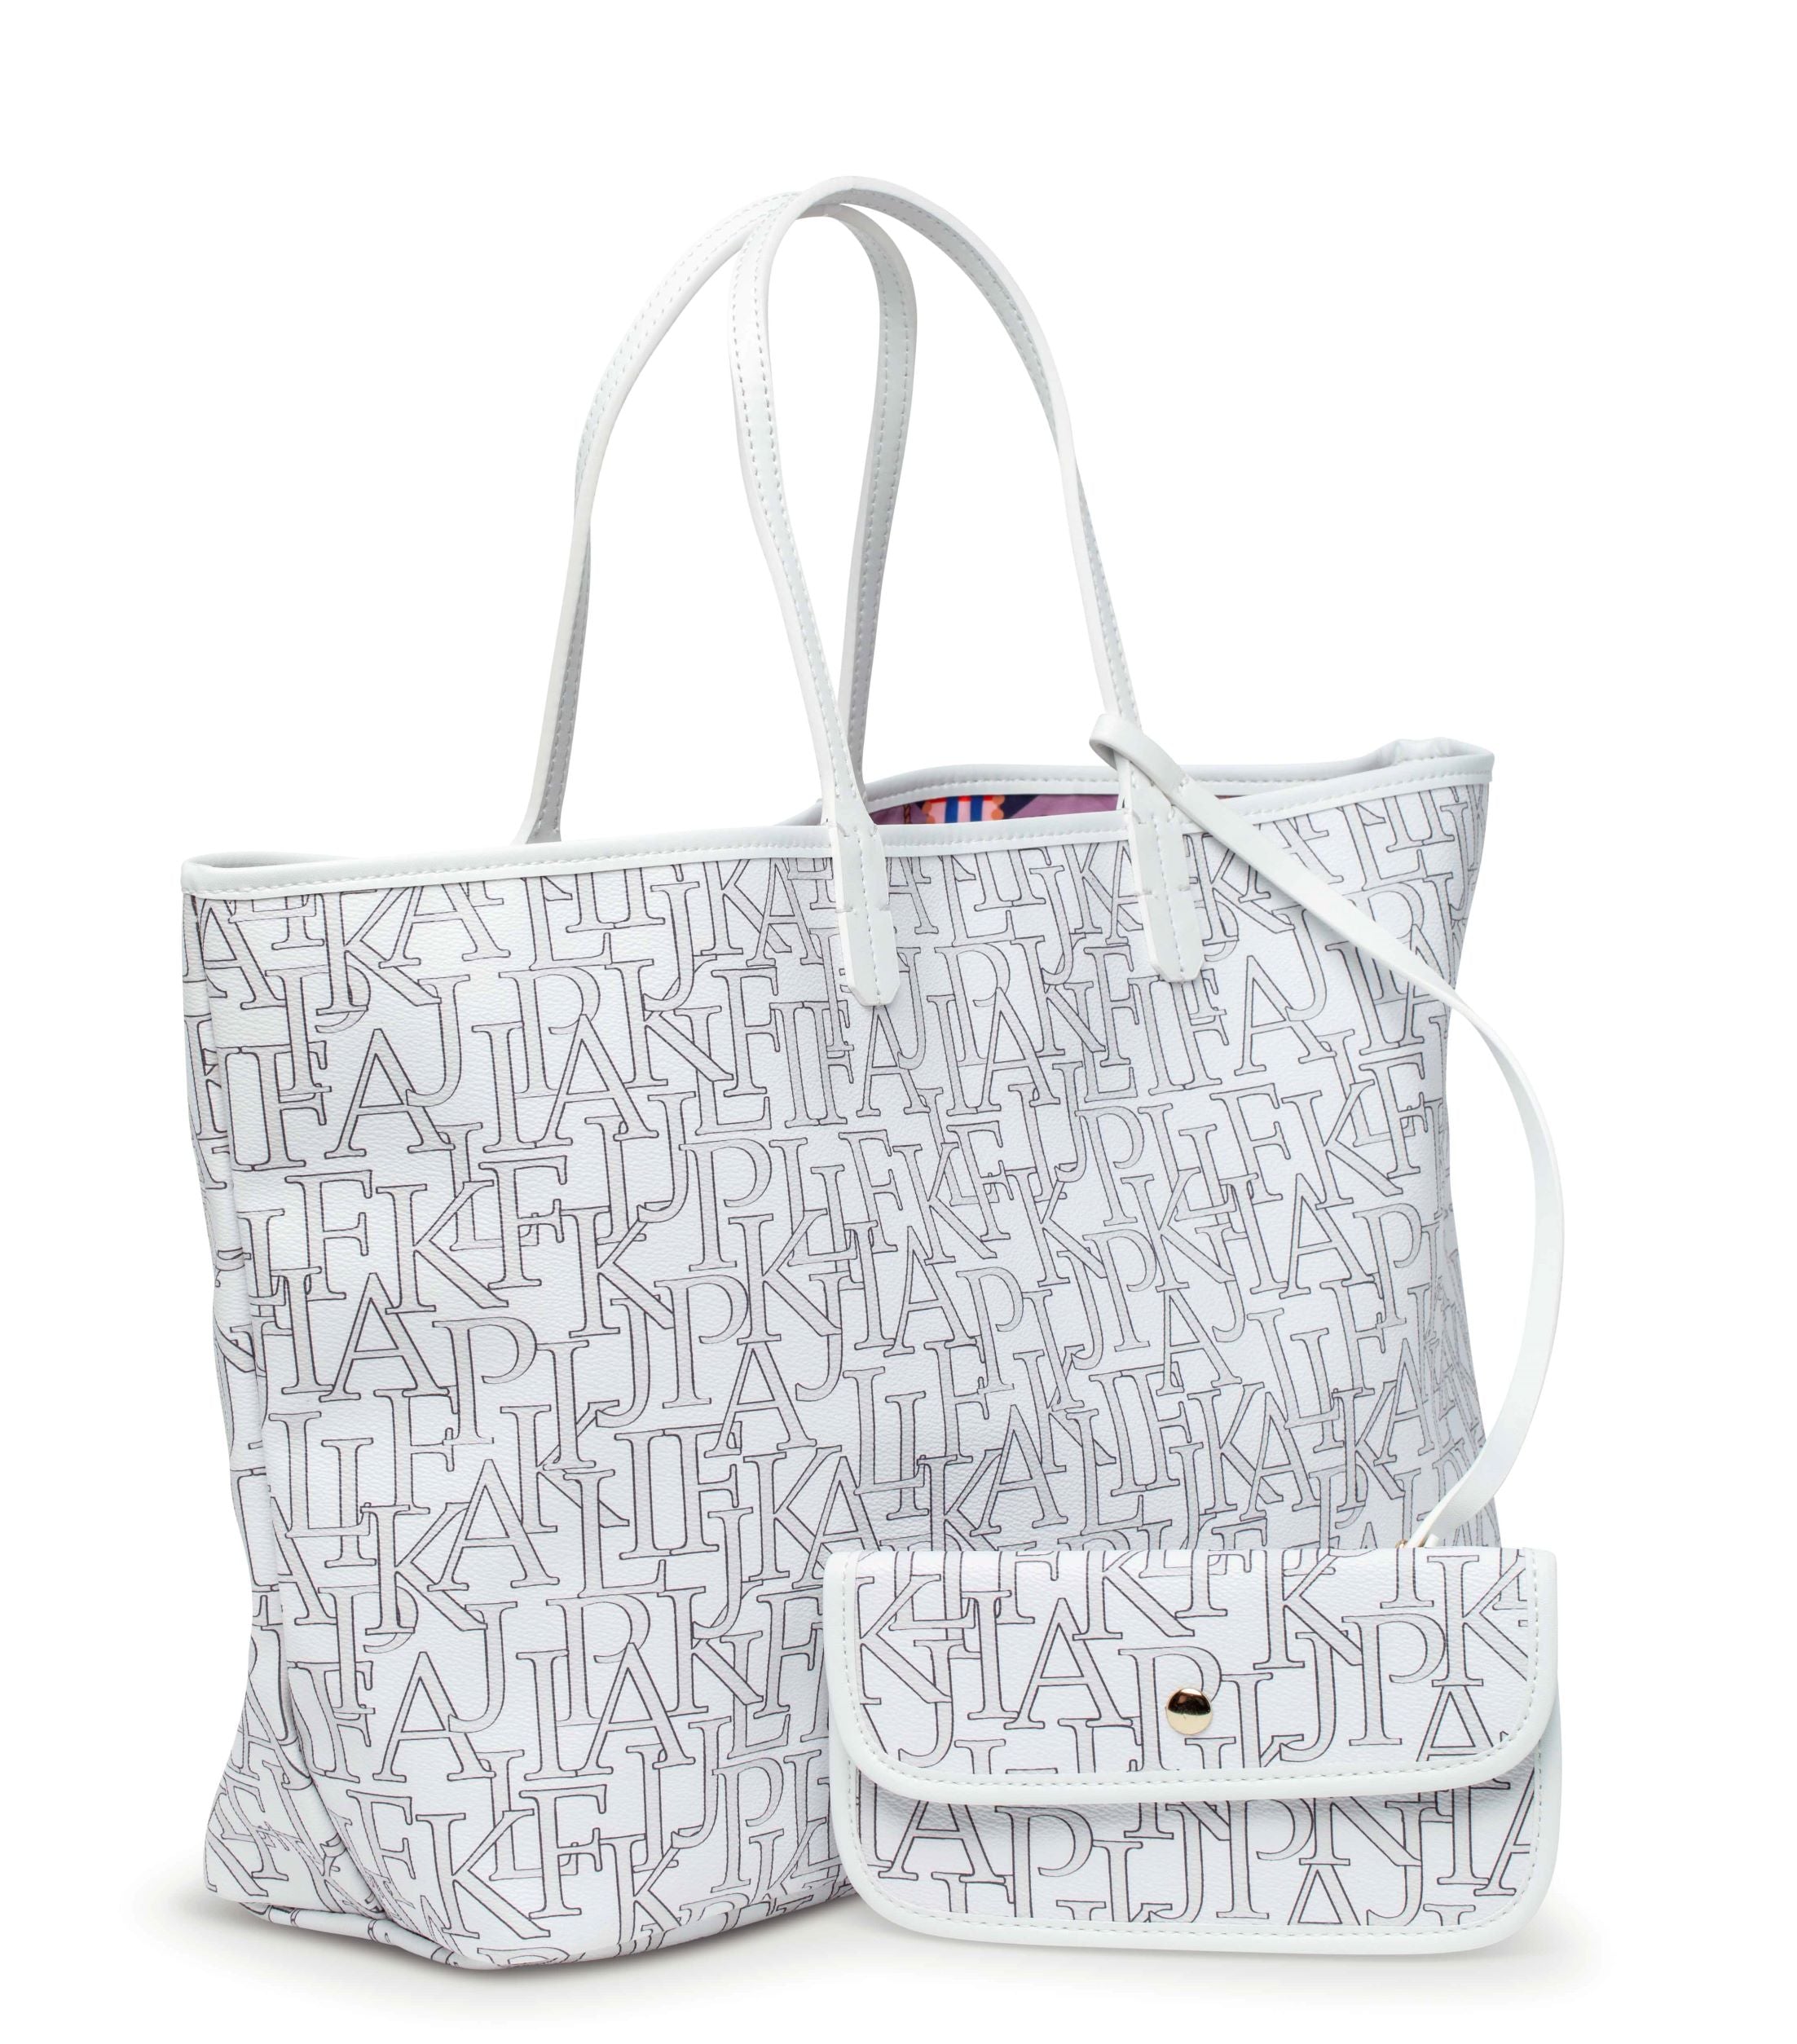 JPK Shopper Bag Handbag jeanpierreklifa.com   